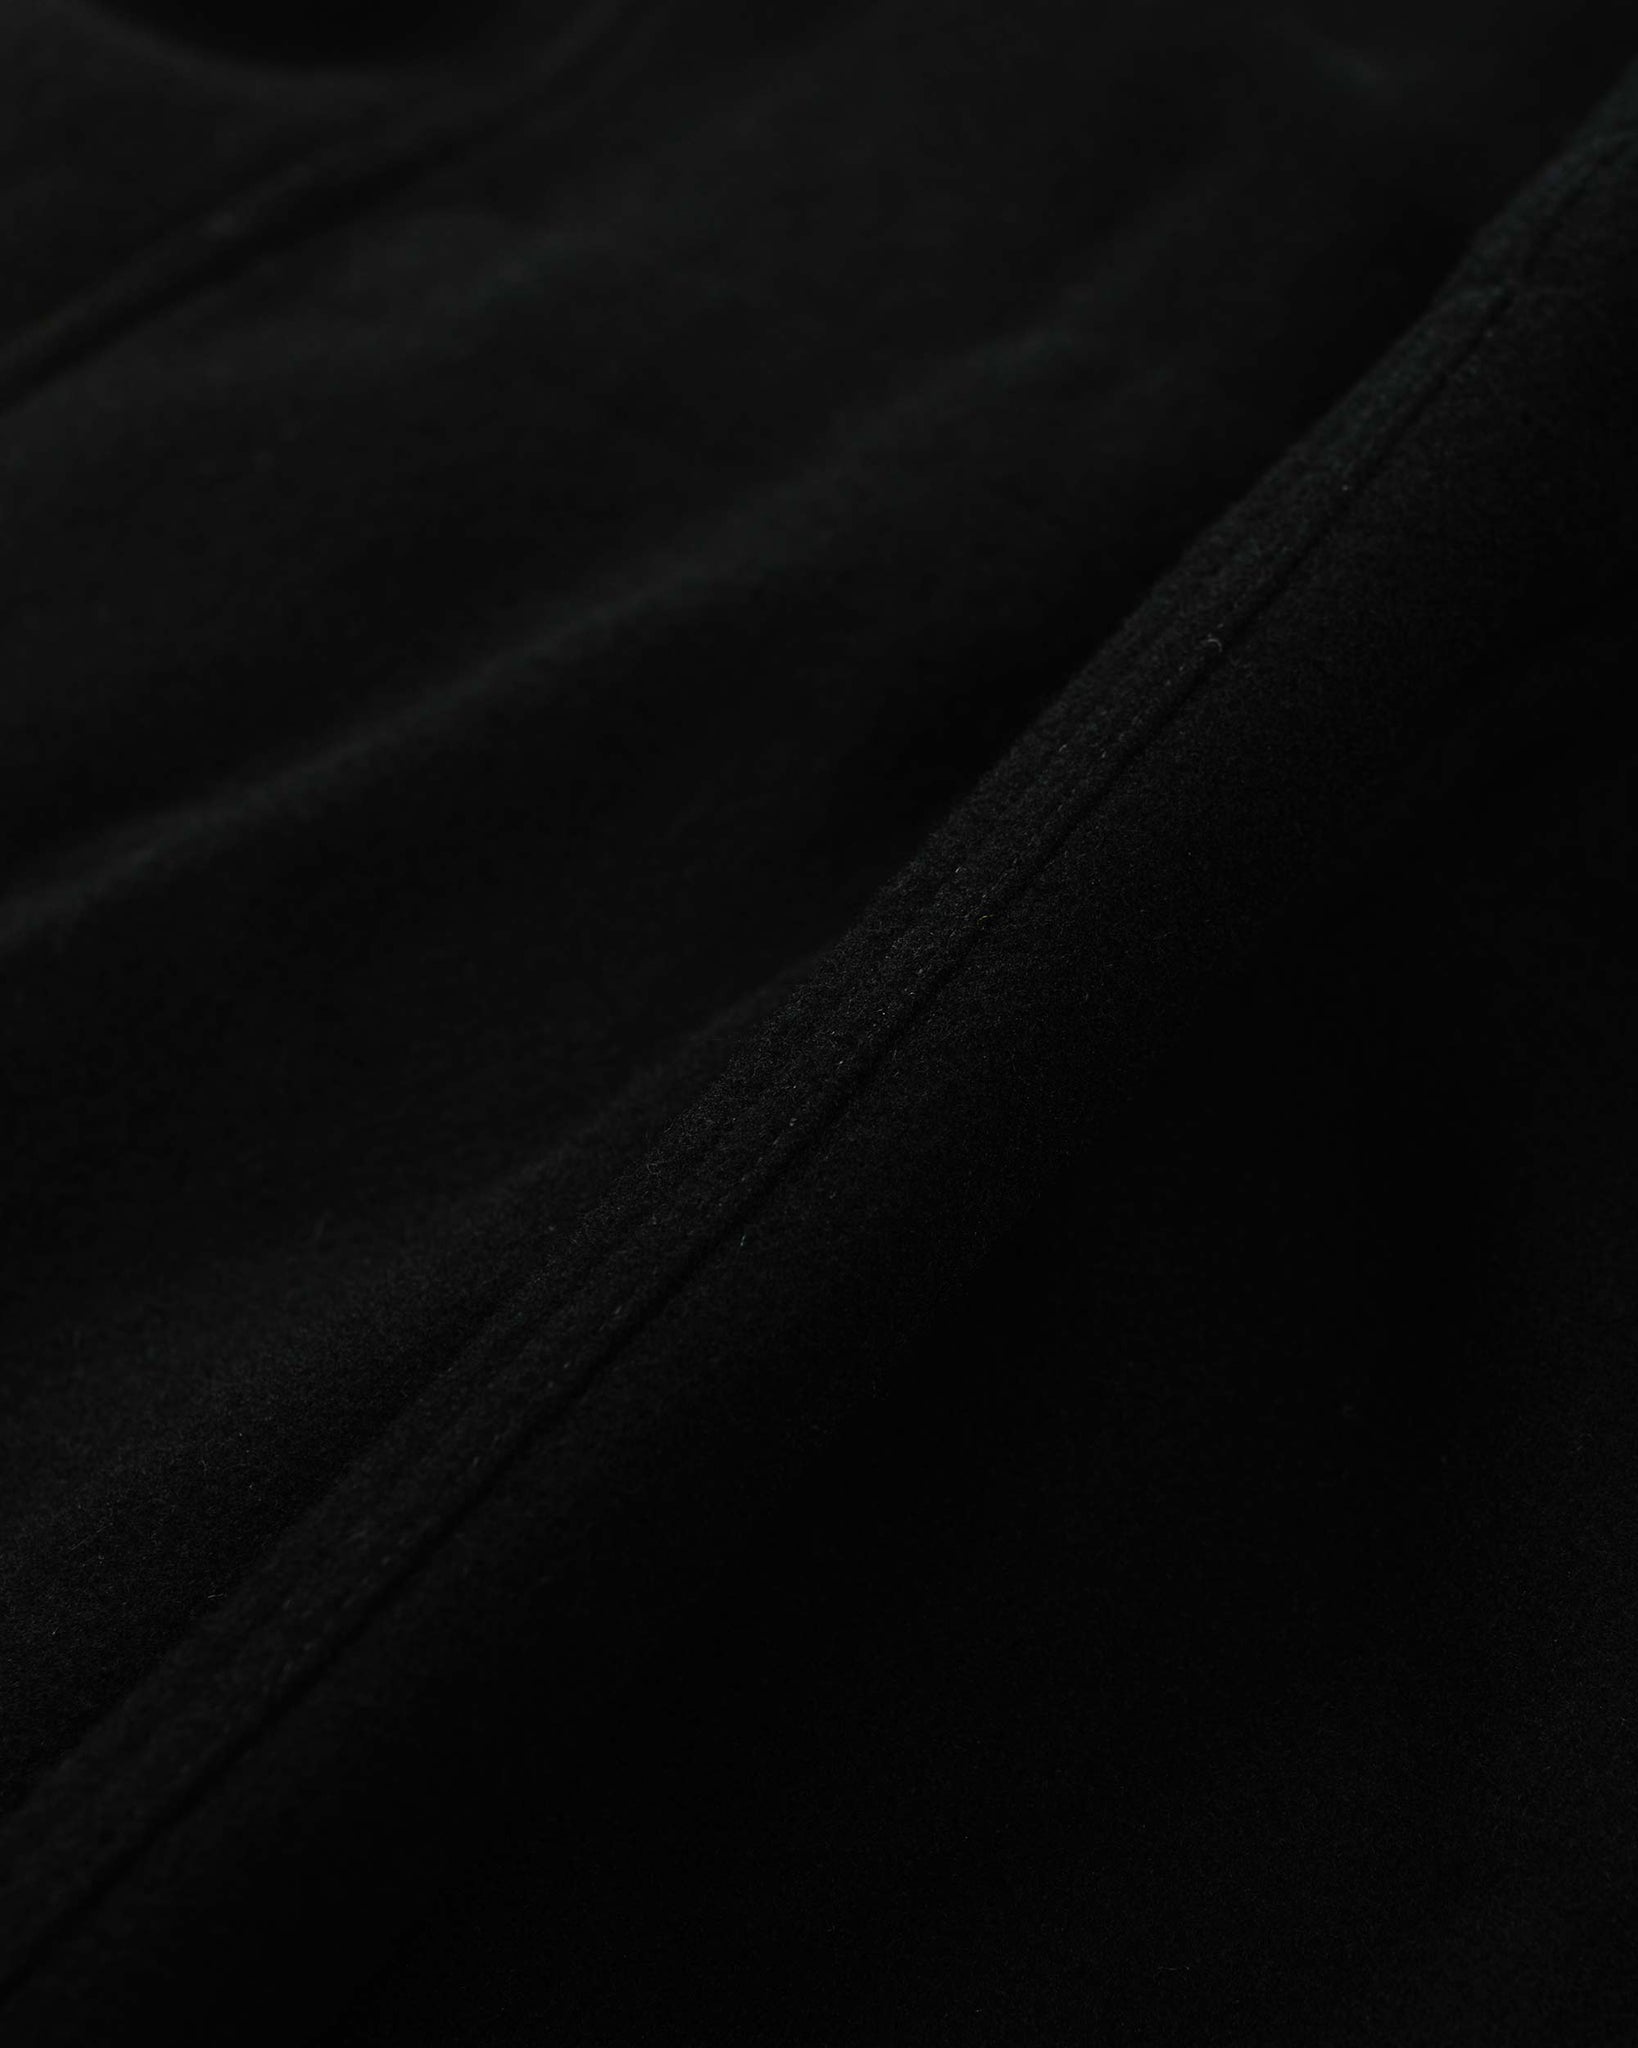 Sage de Cret Super 100 Melton Washer Balmacaan Long Coat Black